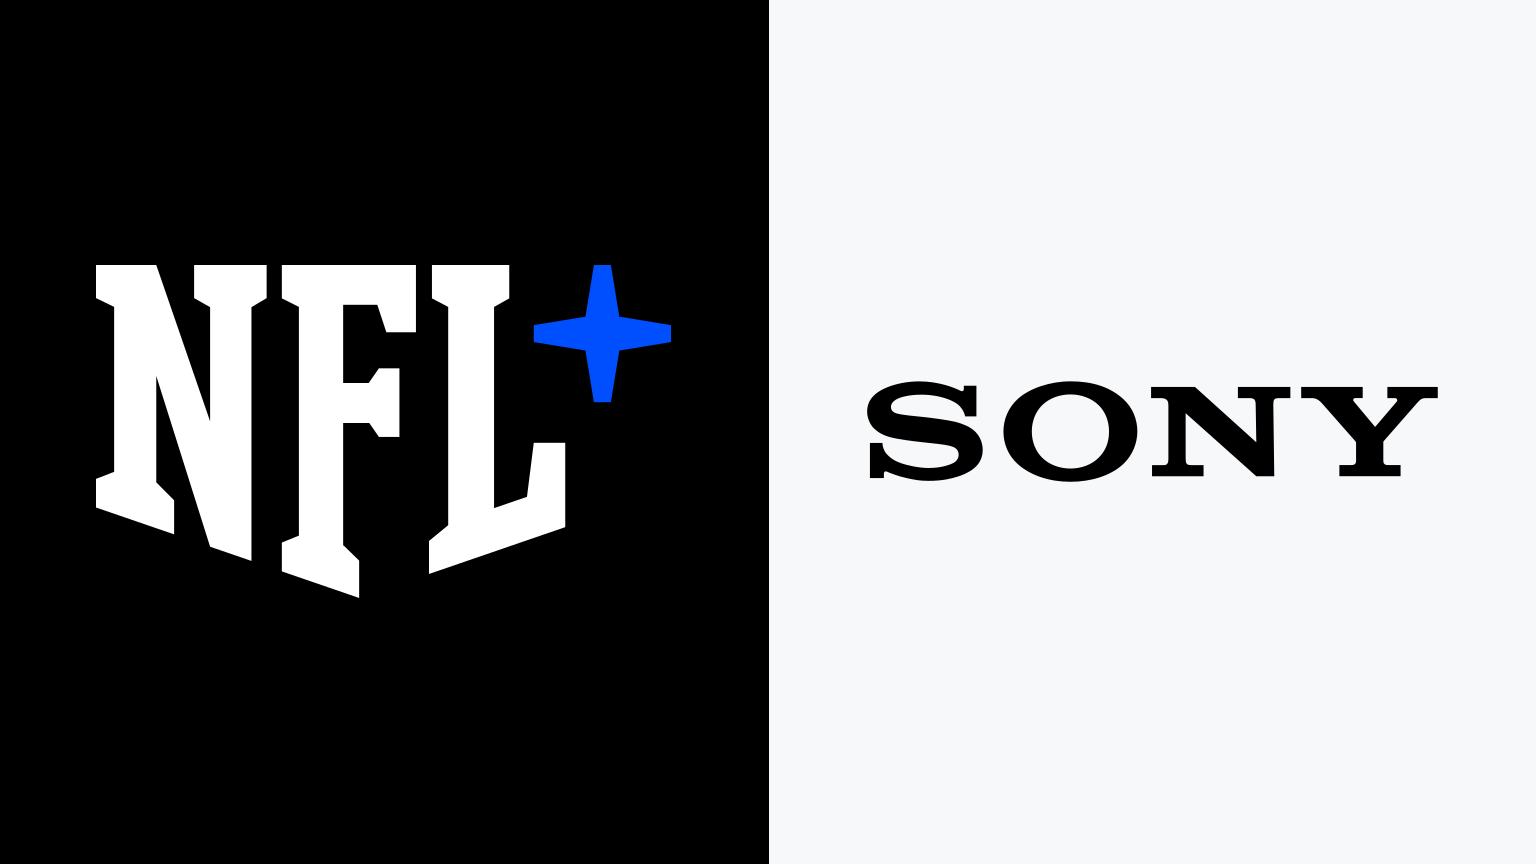 How to Stream NFL on Sony Smart TV - Smart TV Tricks